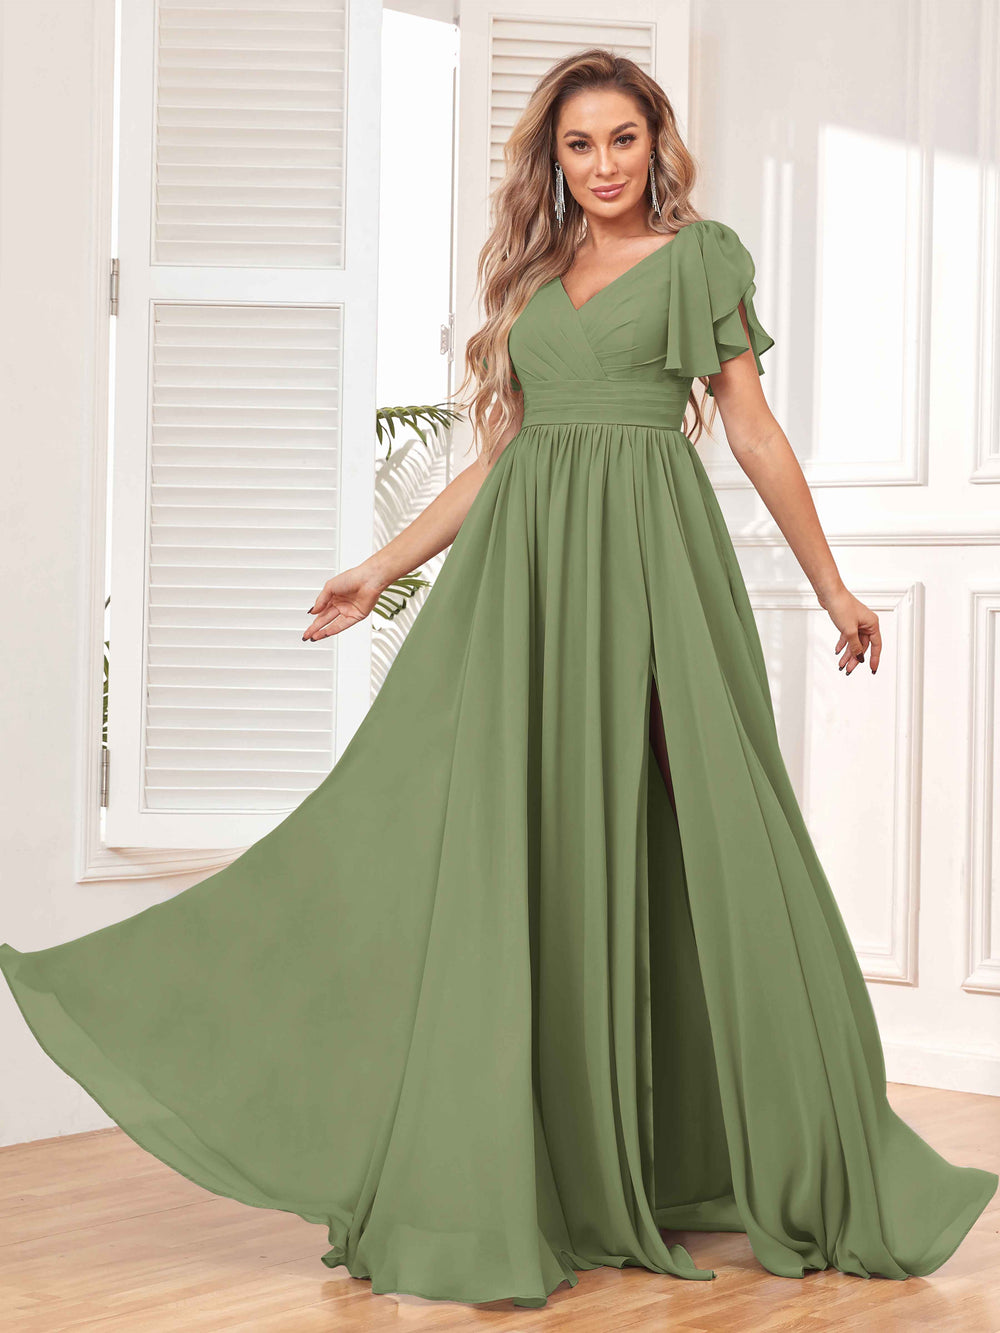 Natalie A Line Short Sleeves Ruched Chiffon Olive Green Bridesmaid Dresses 1 Baa7d40b 60f0 4234 A829 20c6c3403ab6 ?v=1703557615&width=1000